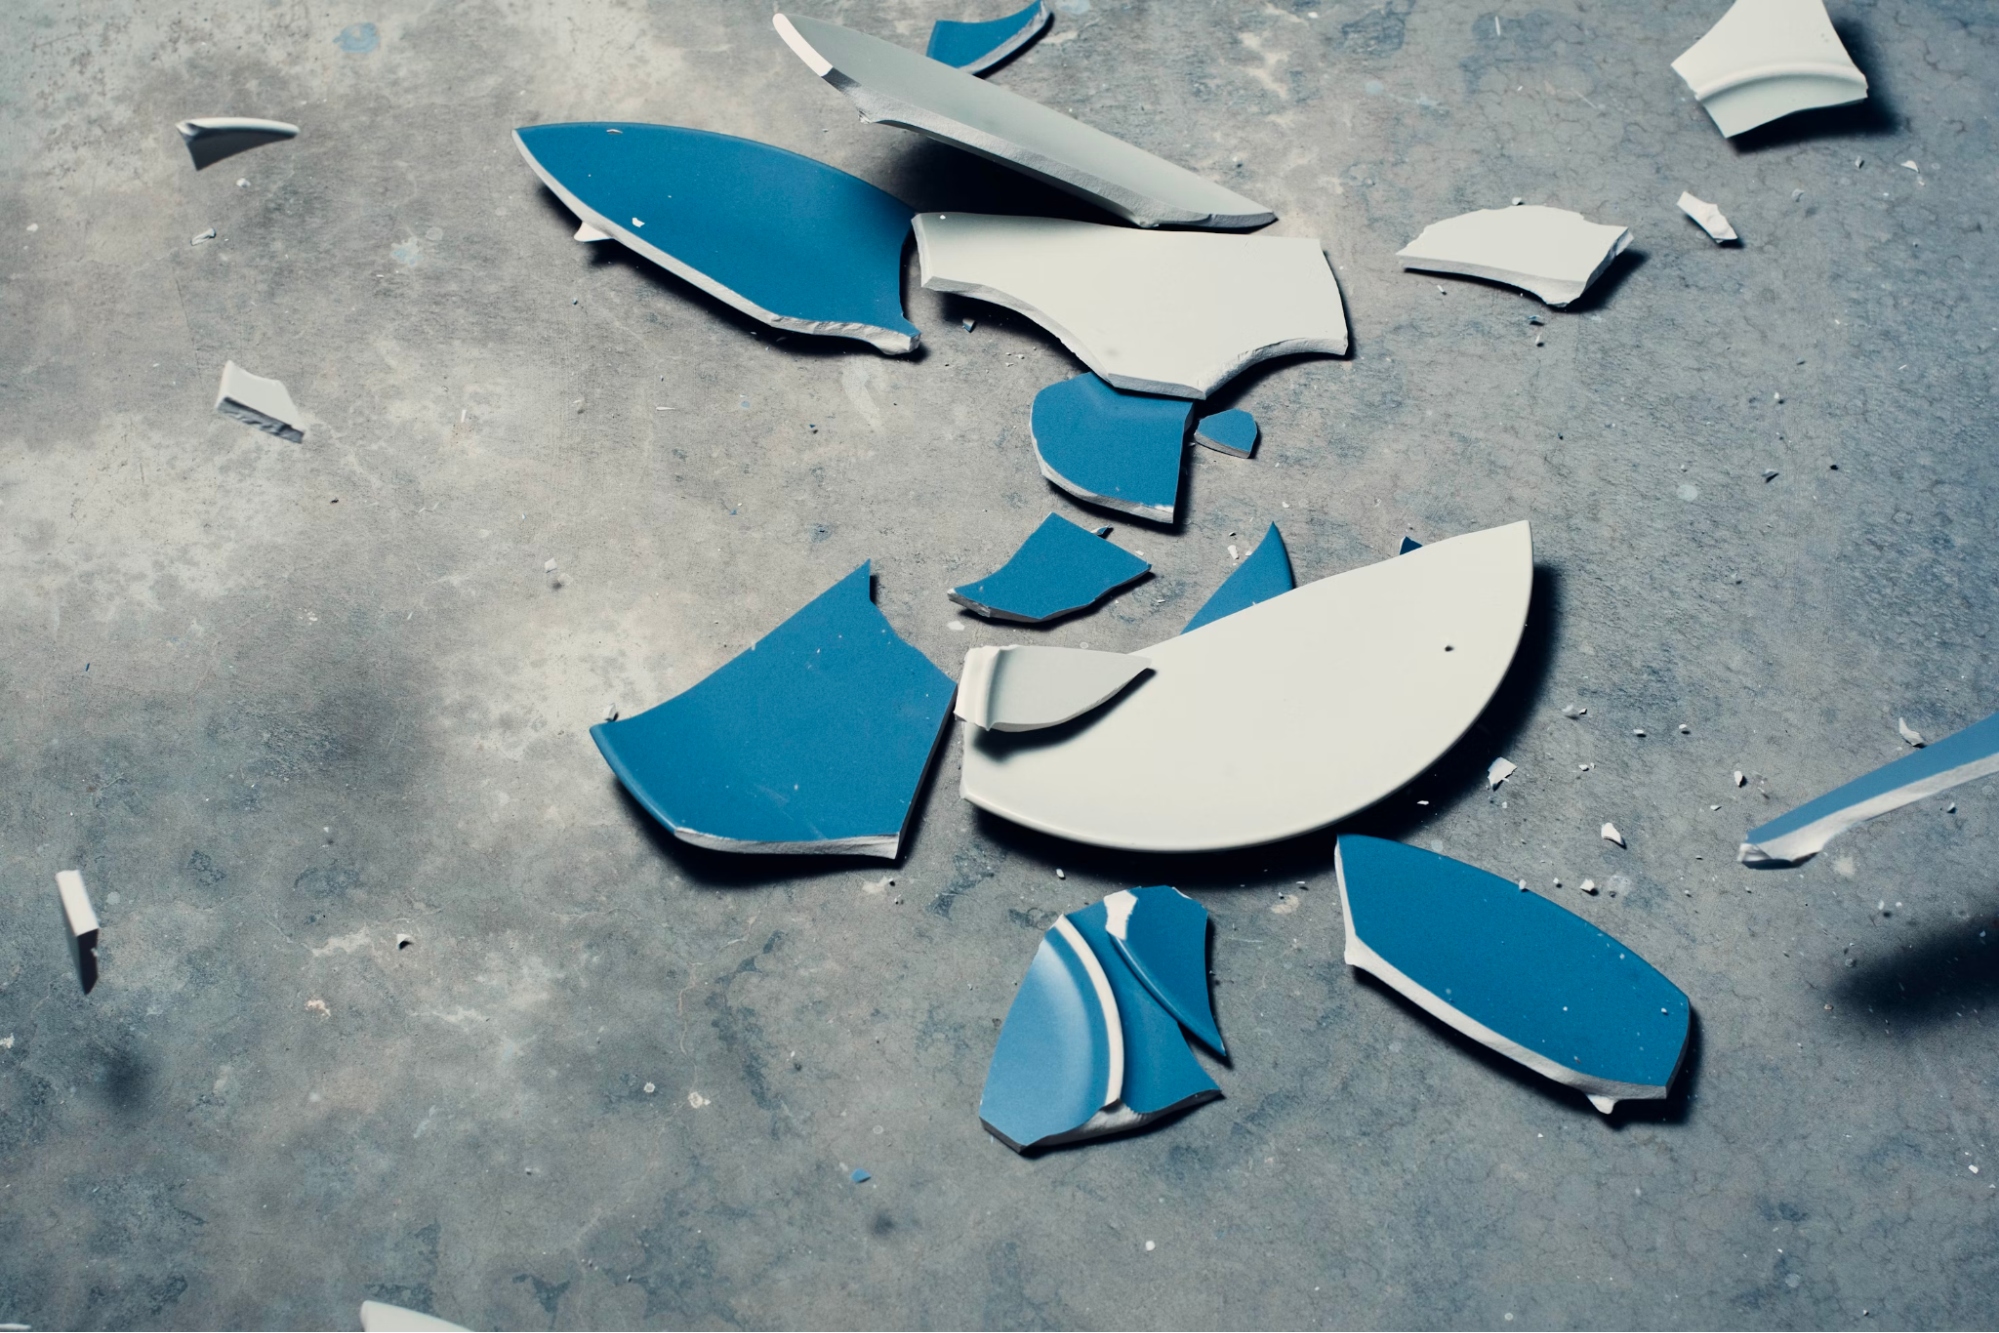 A blue ceramic plate broken into small pieces